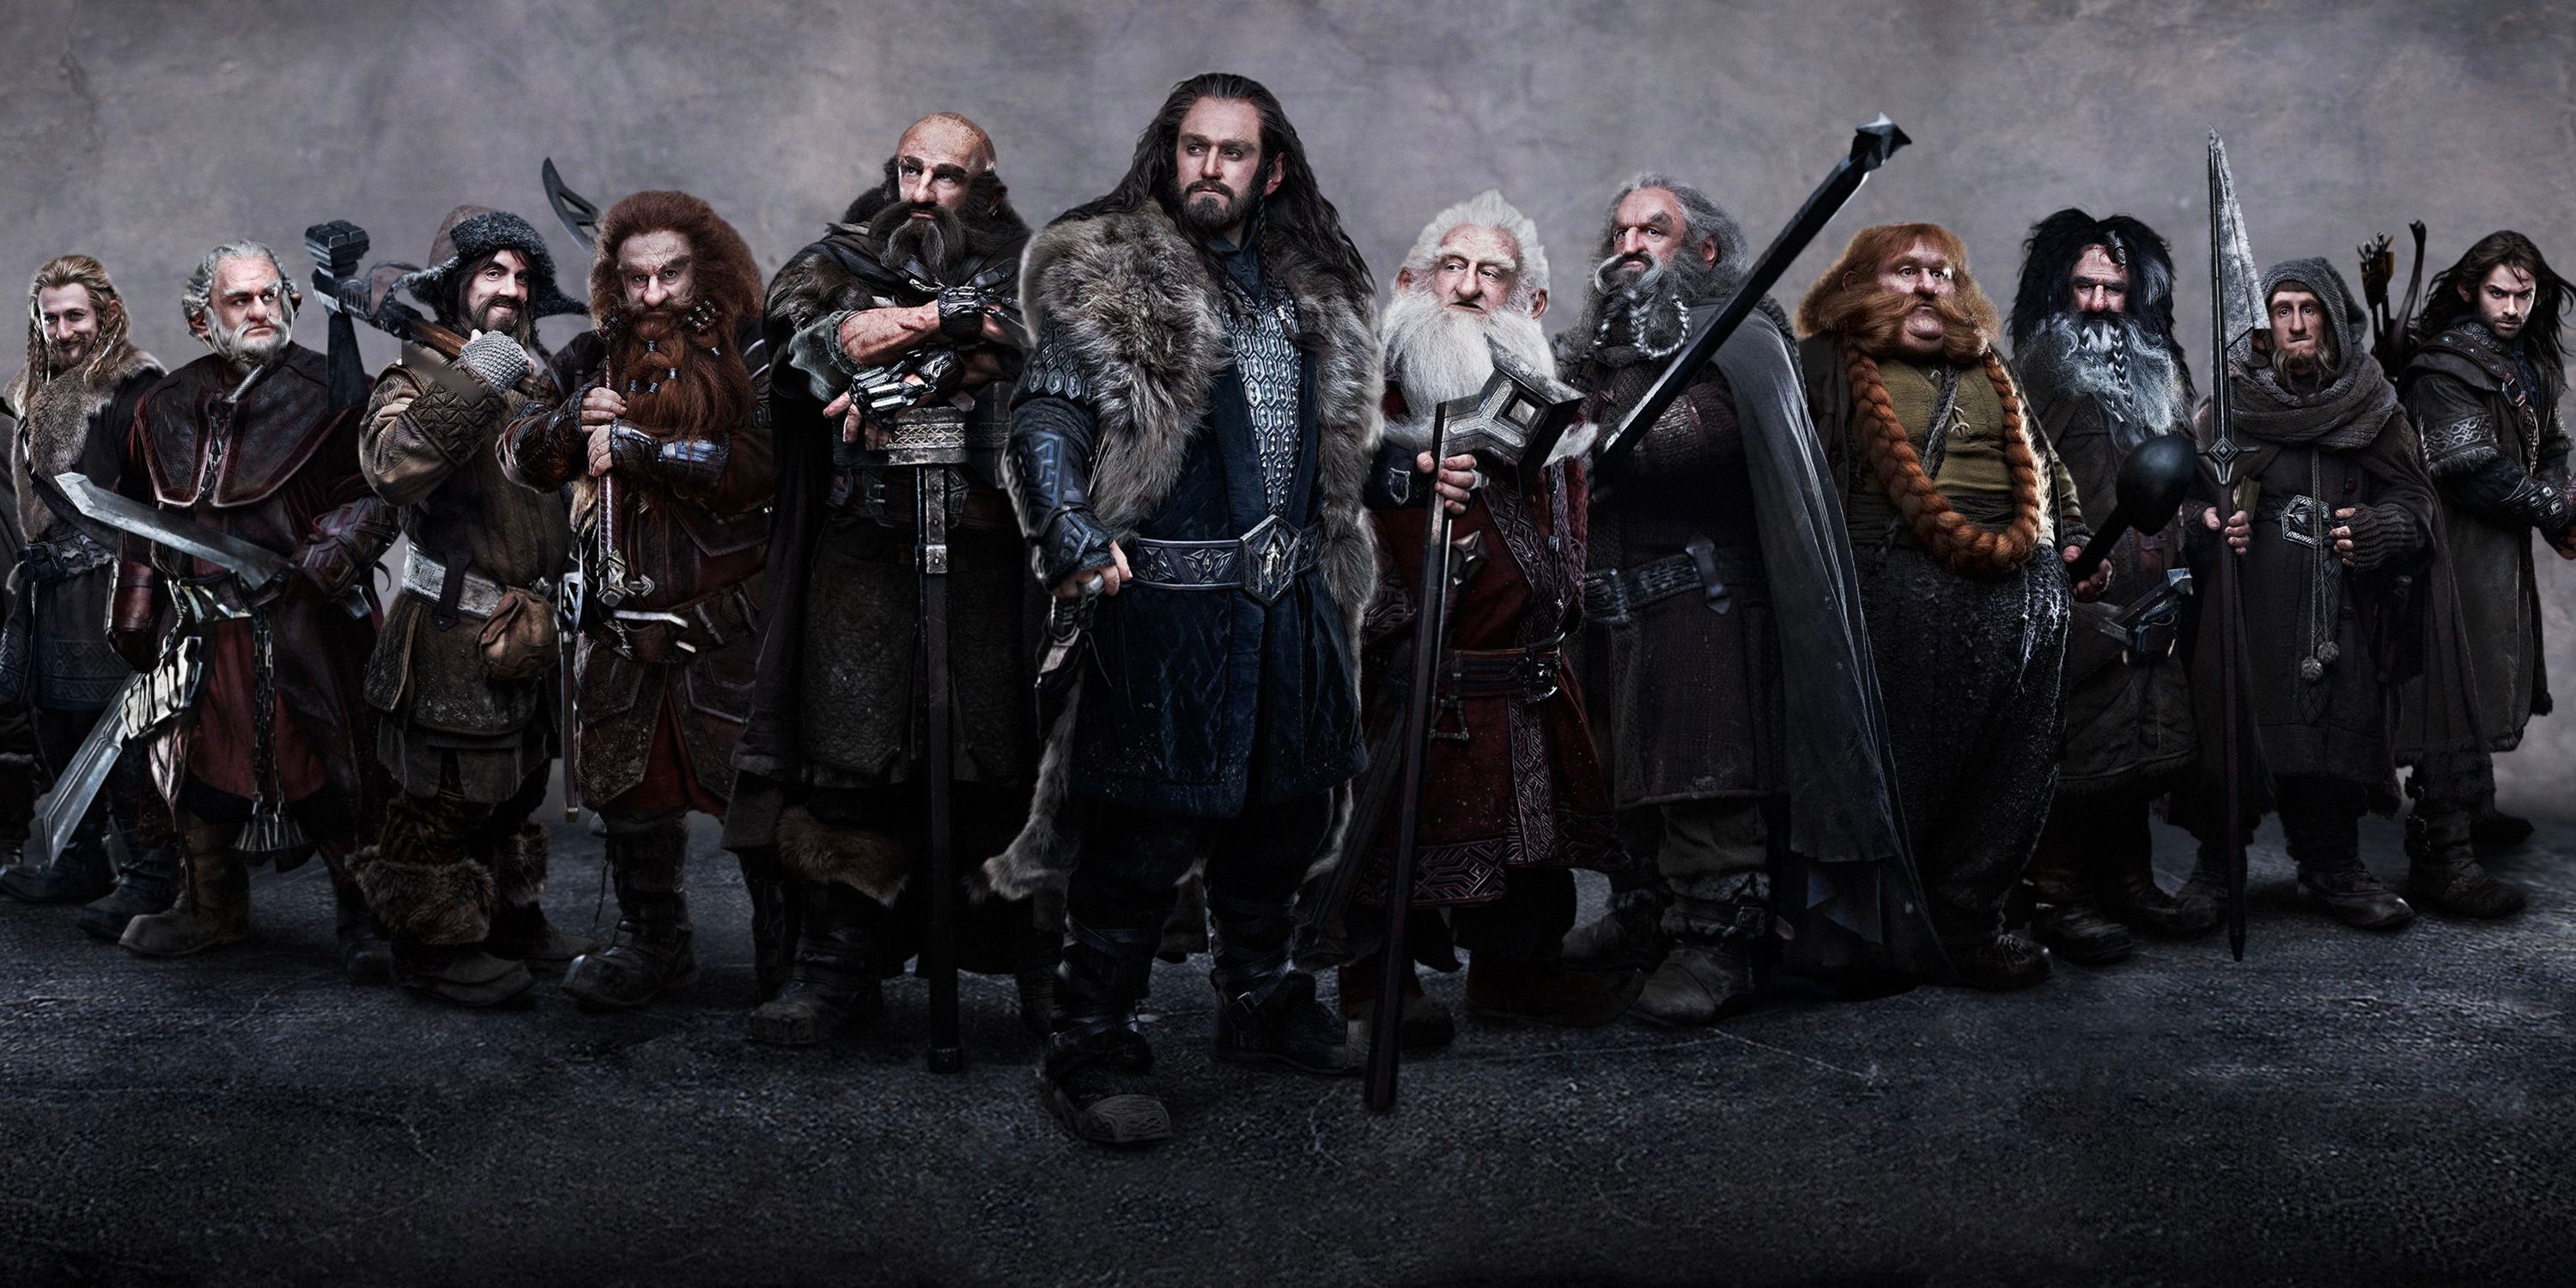 ouder Medaille heroïsch The Hobbit' The 13 Dwarves, Ranked